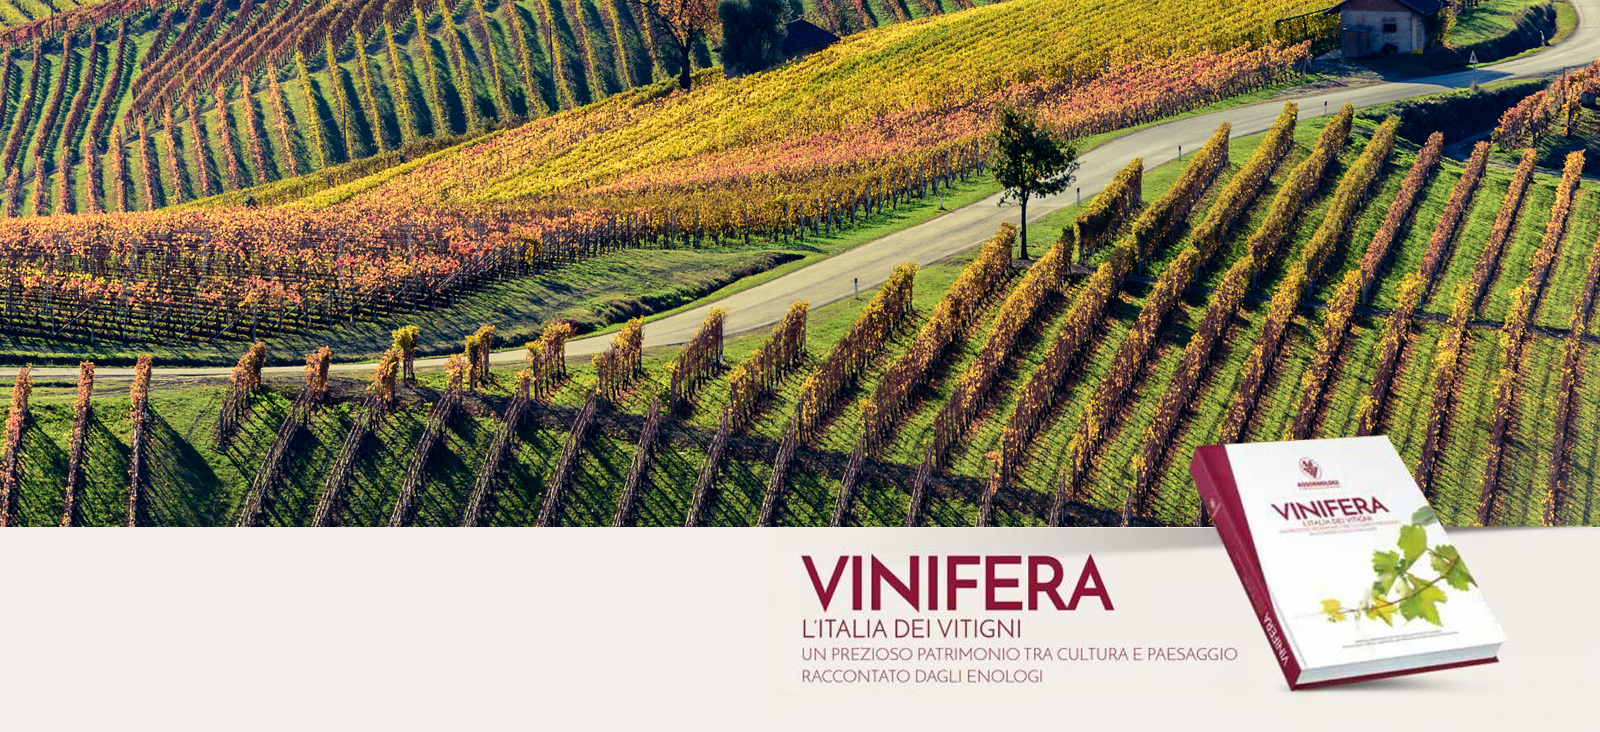 Vinifera - Guida ai vitigni d'Italia